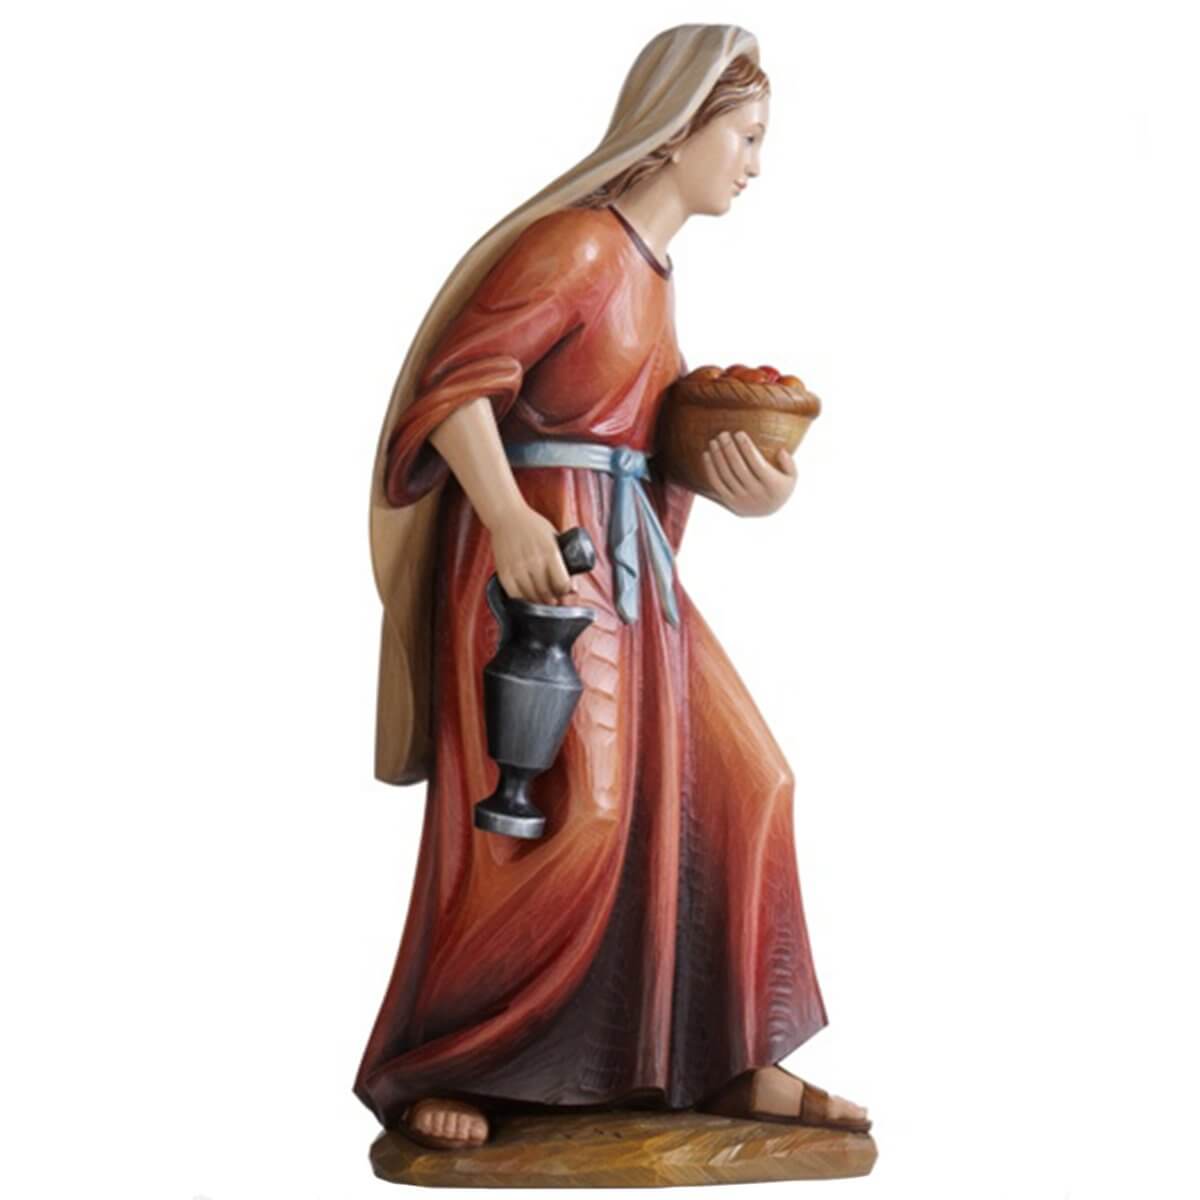 Demetz Nativity Set “Kostner” – Woman Shepherd